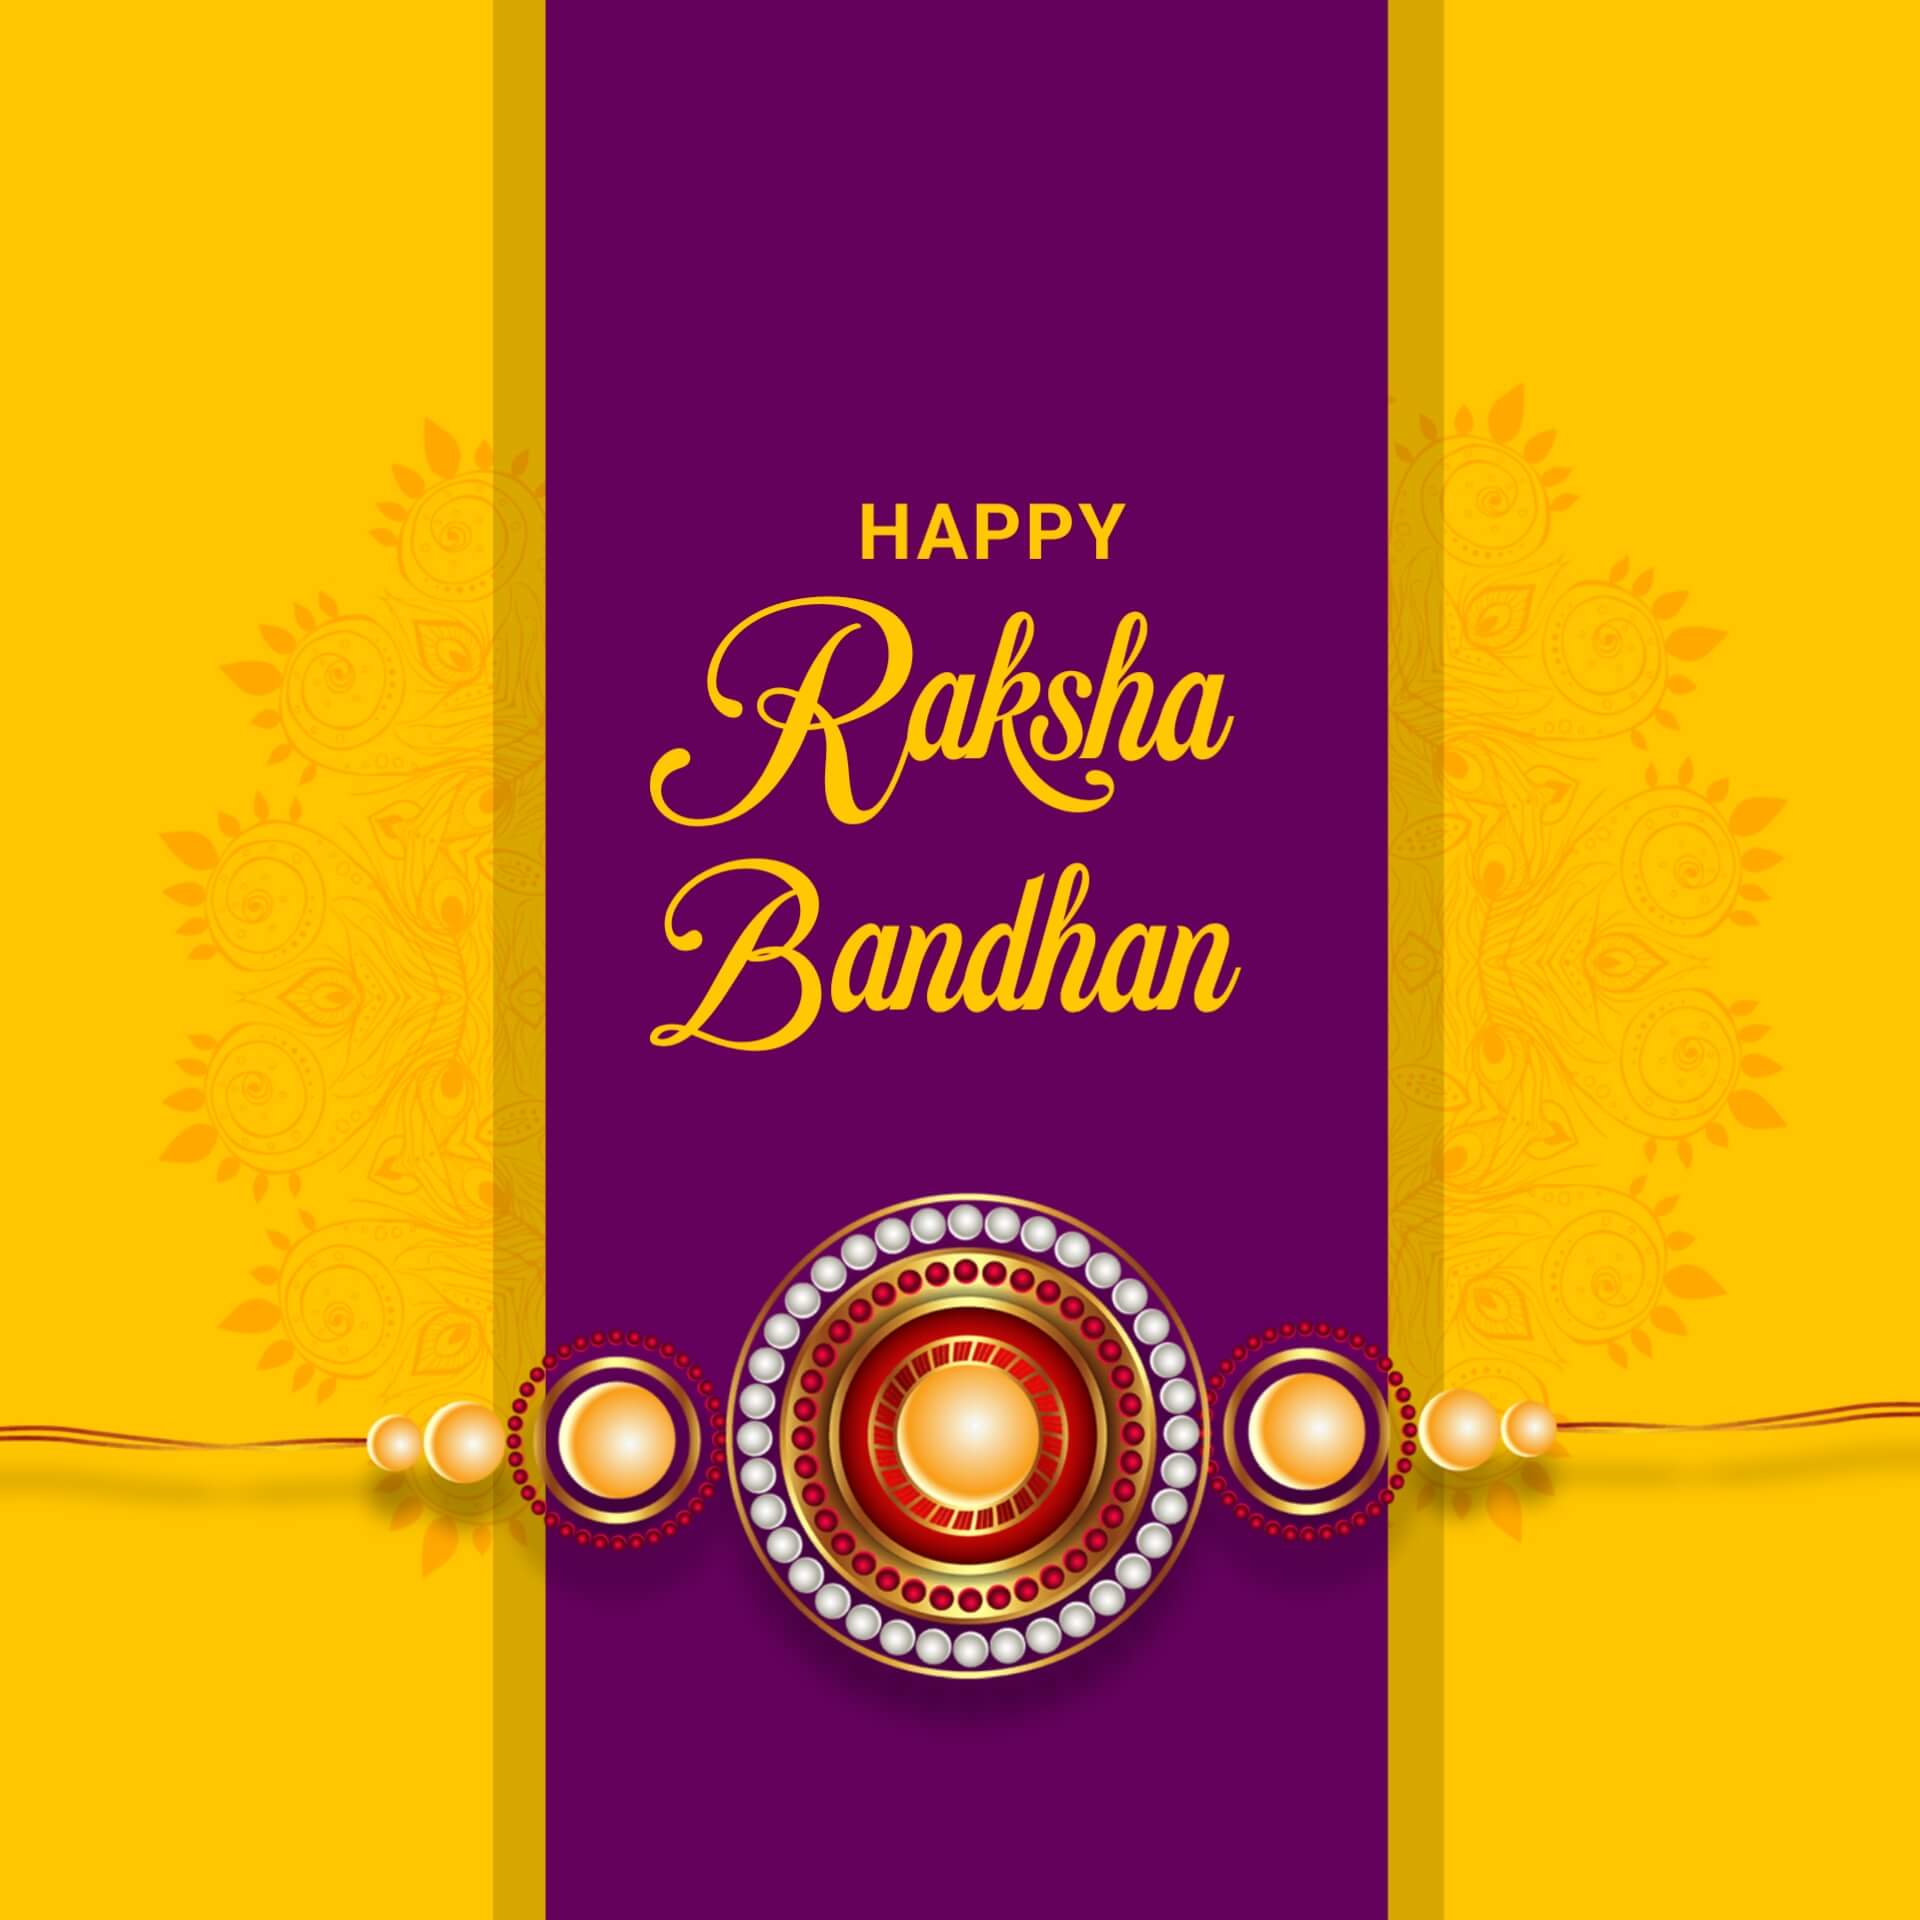 Happy Raksha Bandhan Premium Image